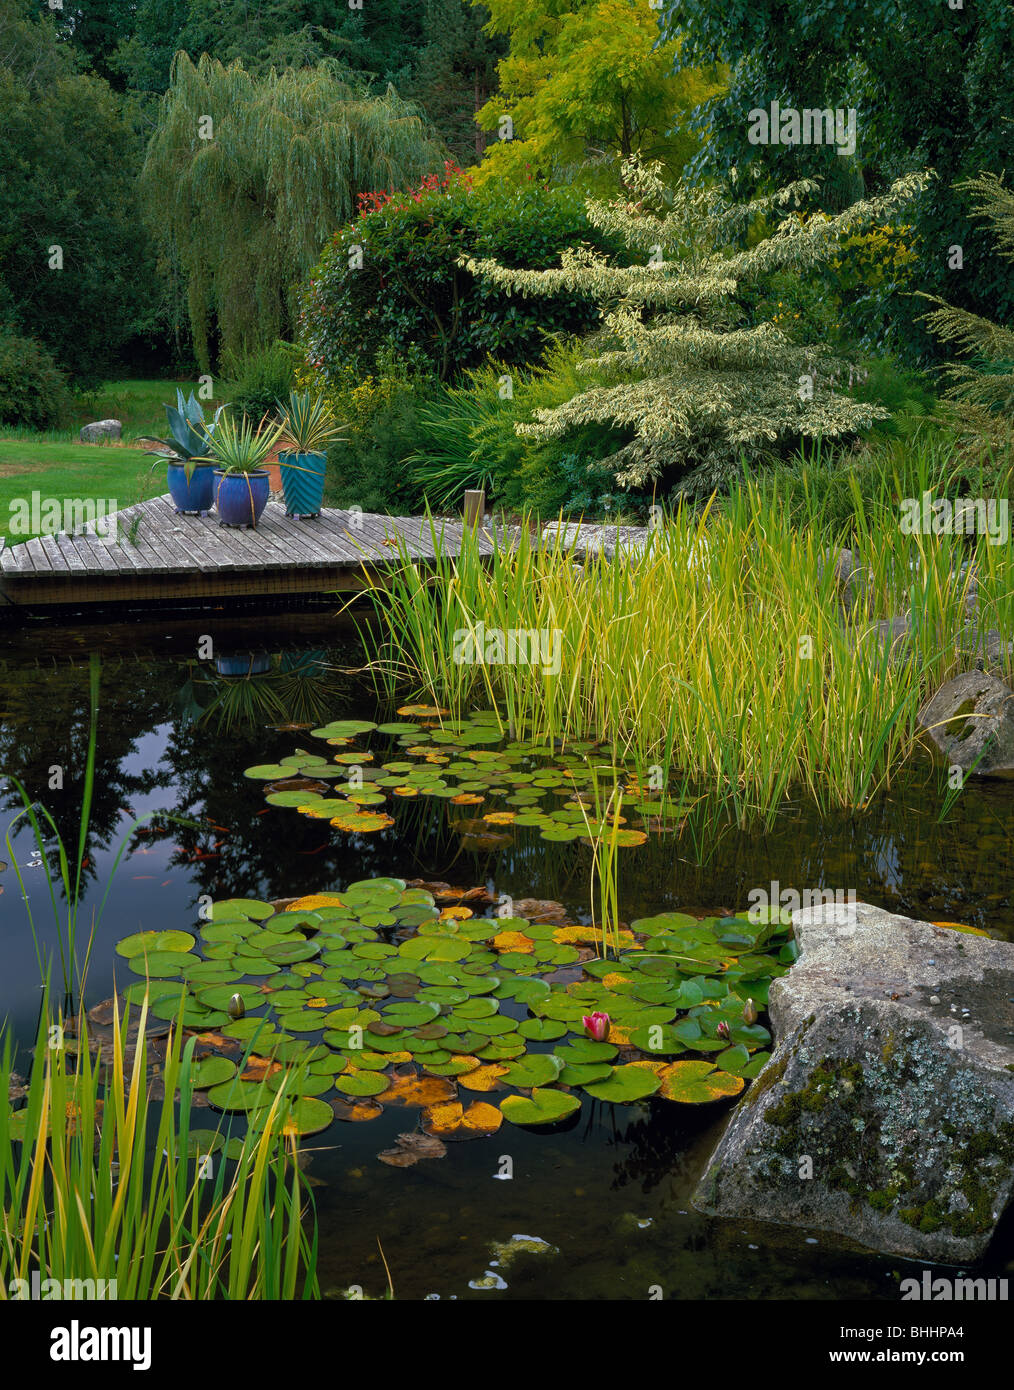 Vashon, WA Cedar walkway encircles a quiet pond with pond lilies